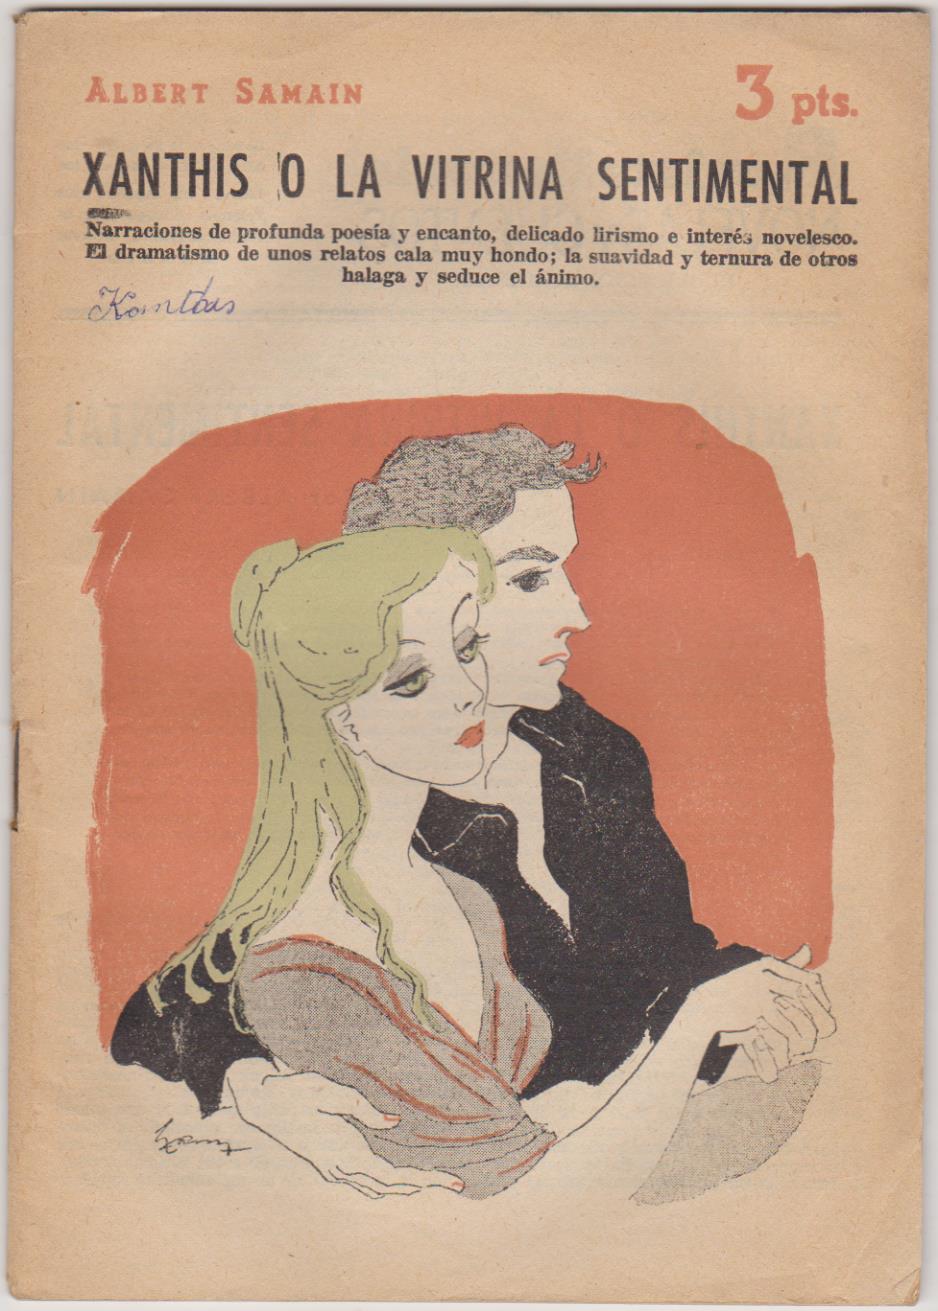 Revista Literaria nº 1392. Albert Samain. Xanthis o la Vitrina sentimental. año 1958